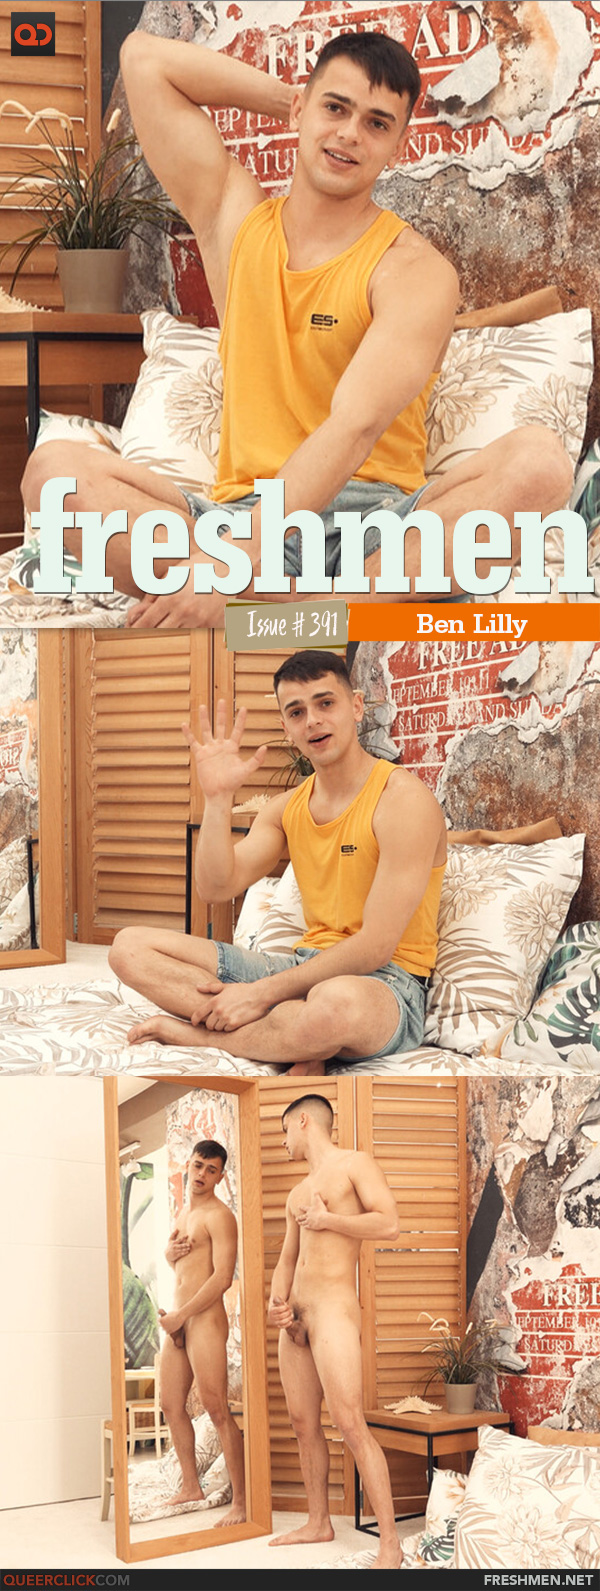 Freshmen.net: Ben Lilly